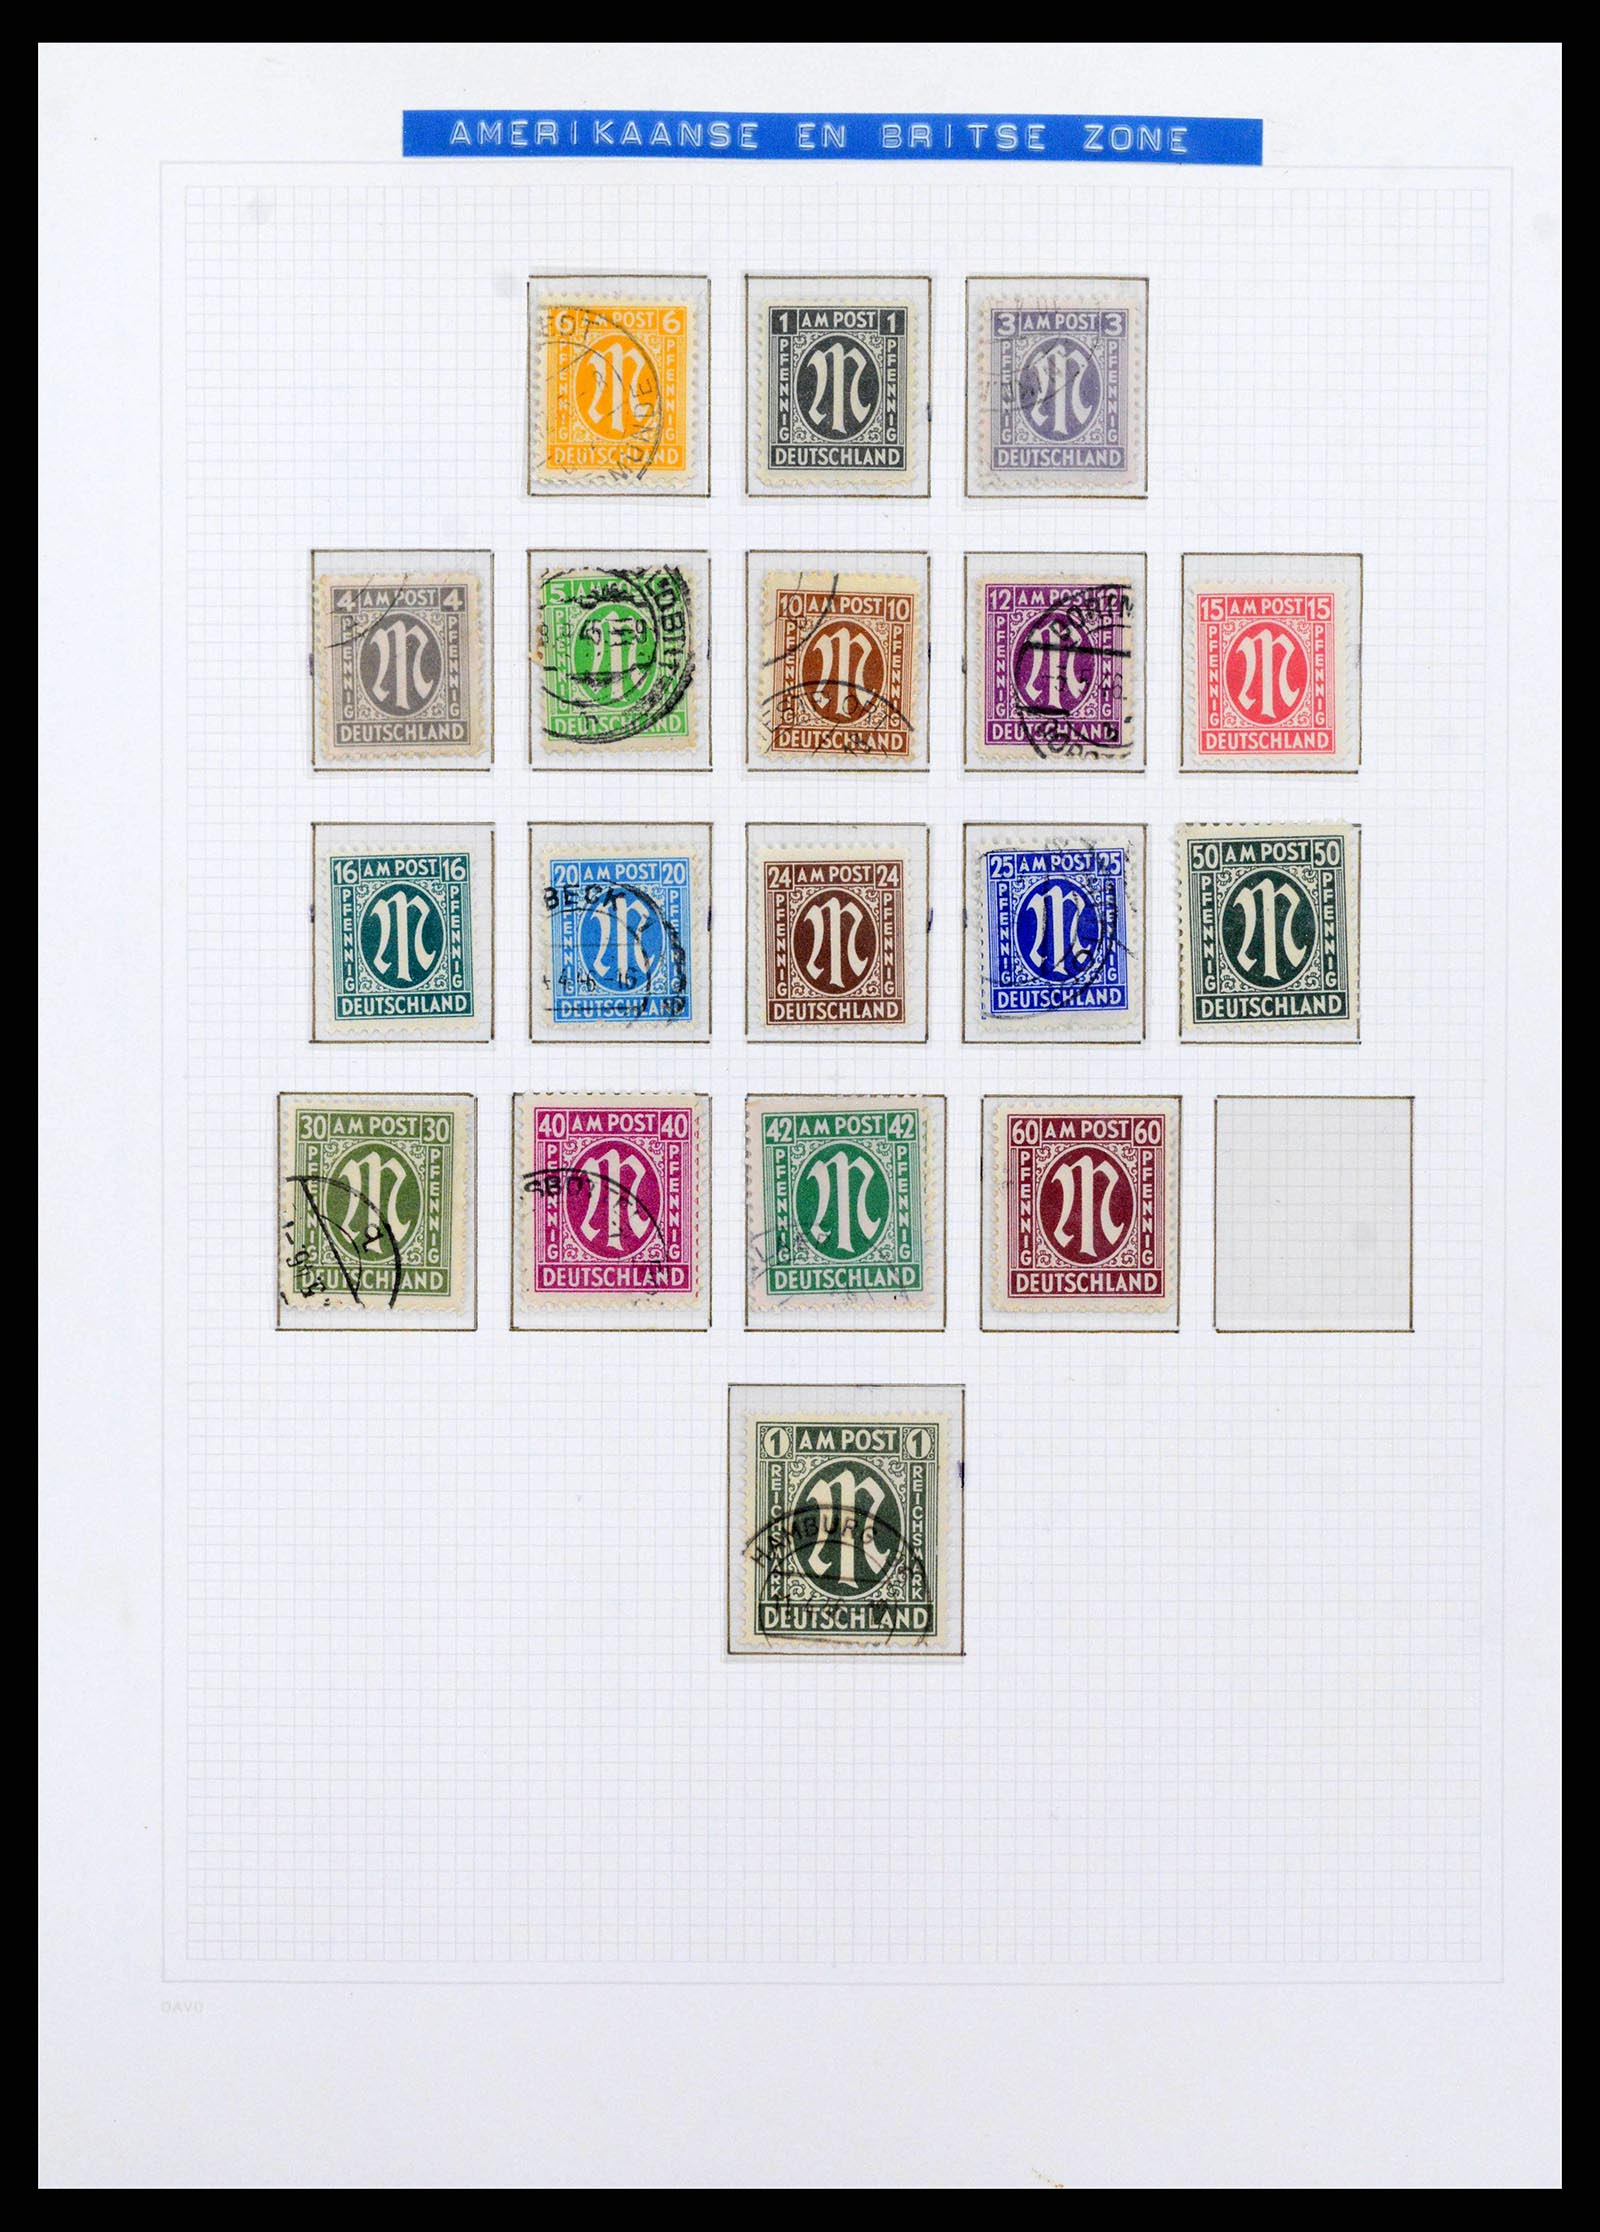 38644 0029 - Stamp collection 38644 German Zones 1945-1948.